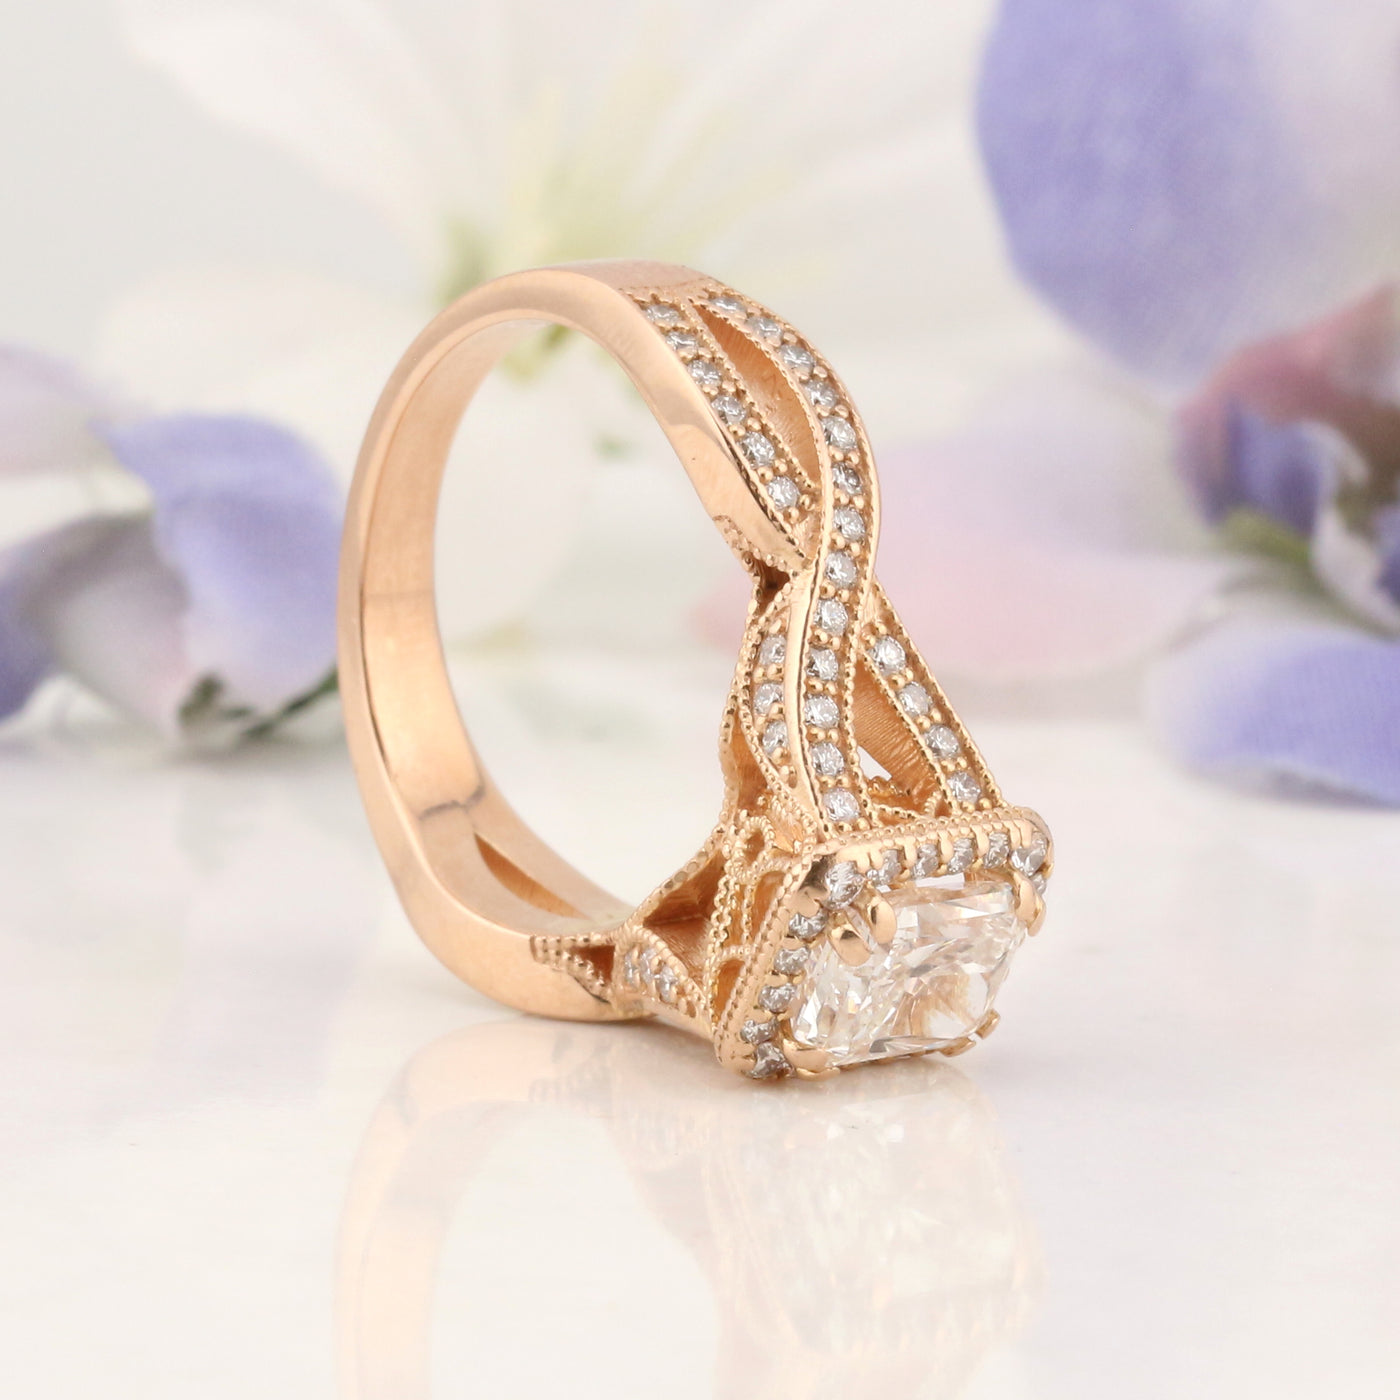 Rose Gold Radiant Cut Diamond Ring